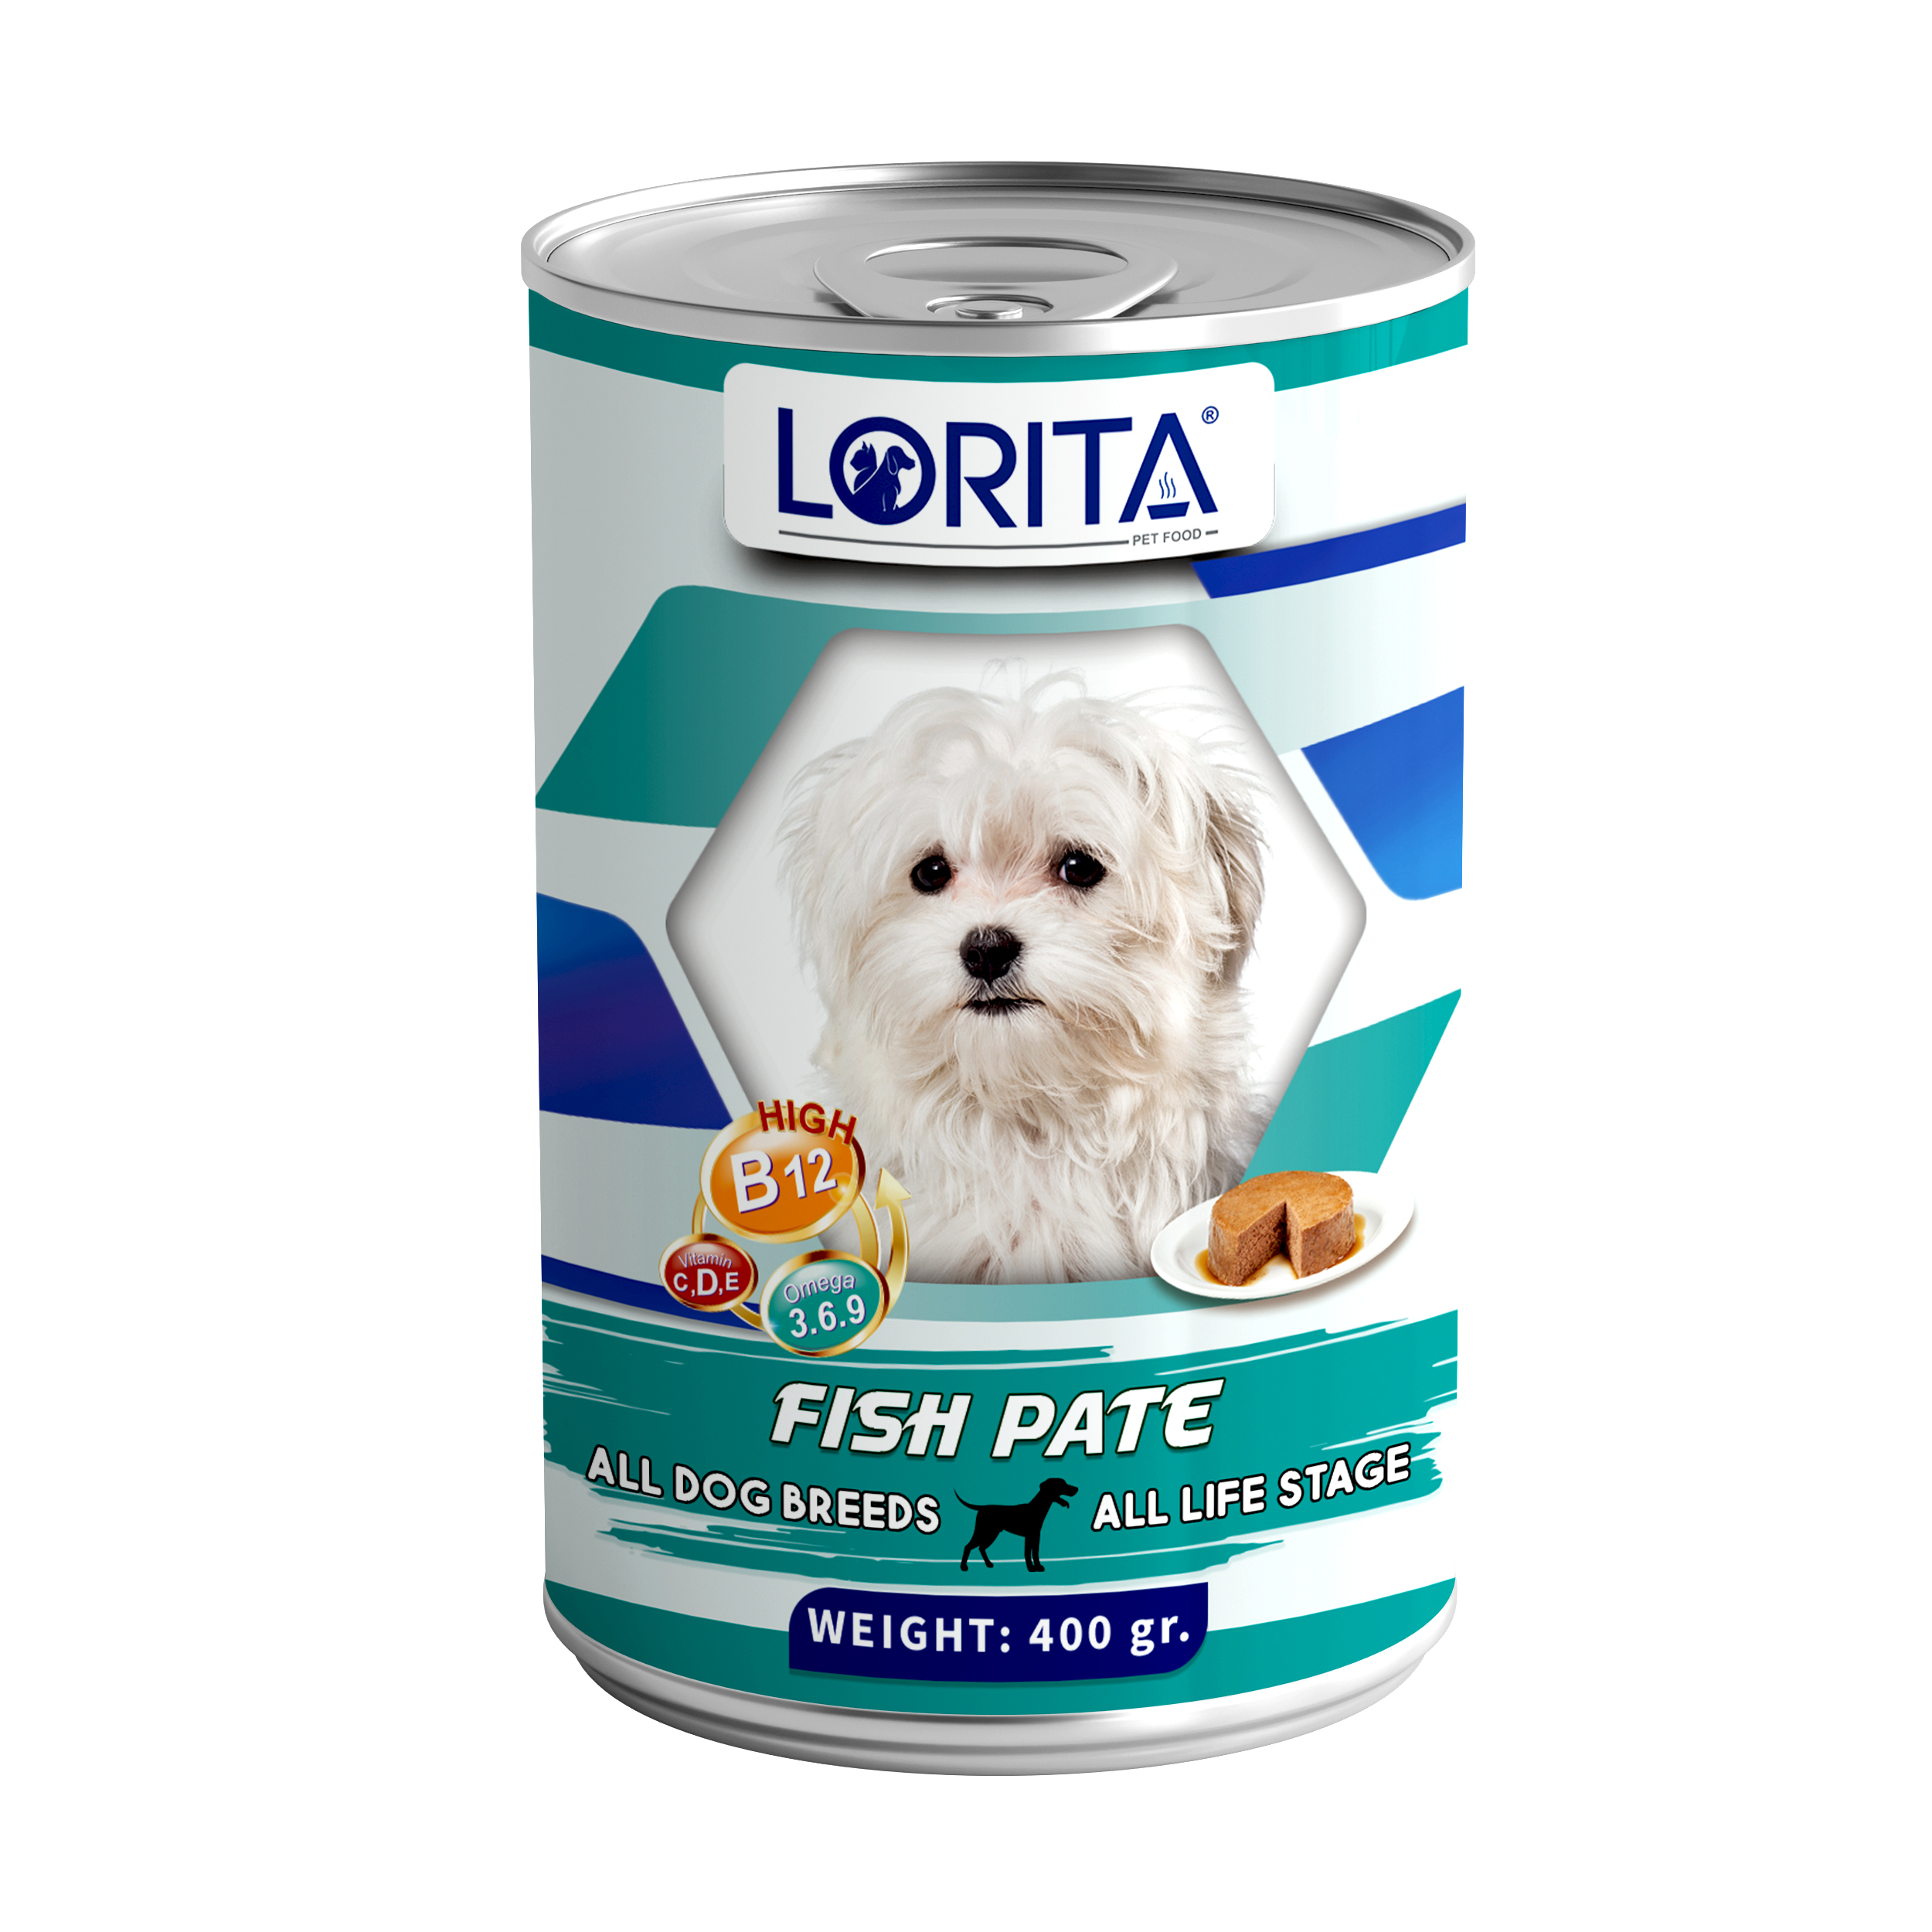  کنسرو غذای سگ لوریتا مدل FISH PATE وزن 400 گرم 